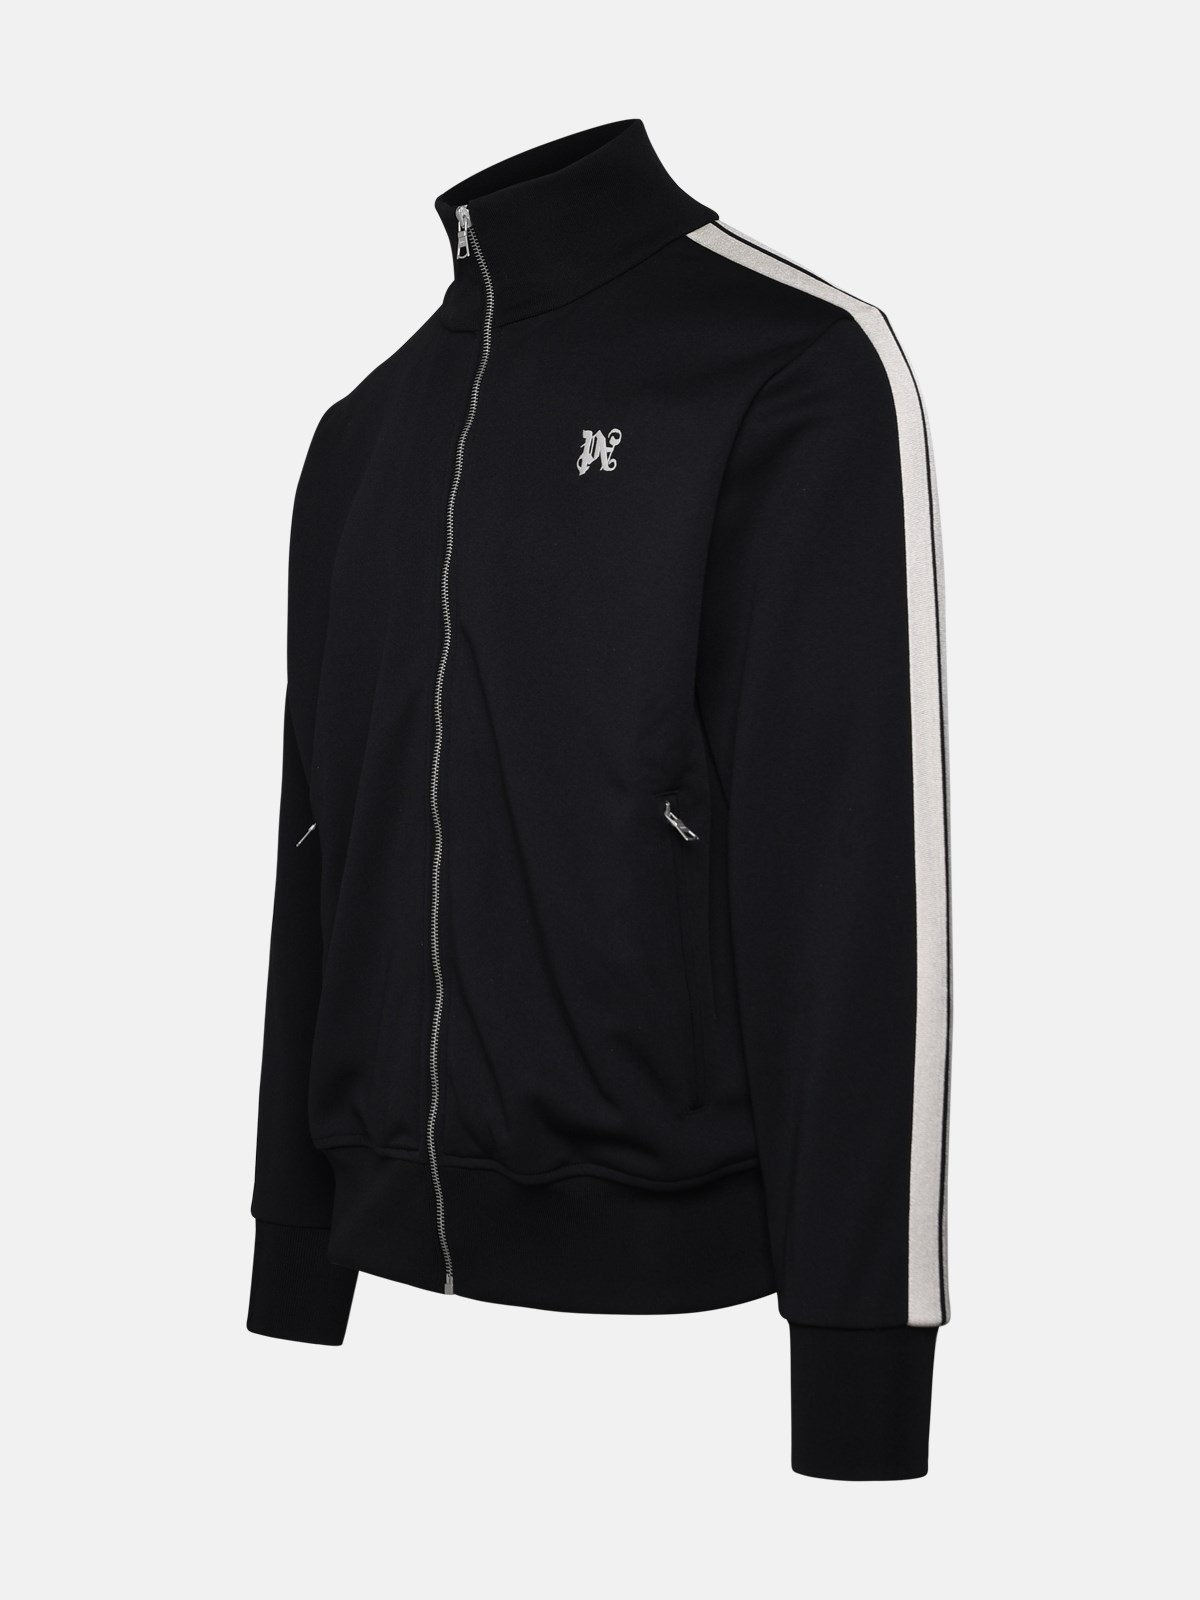 PA Monogram sweatshirt in black polyester - 2